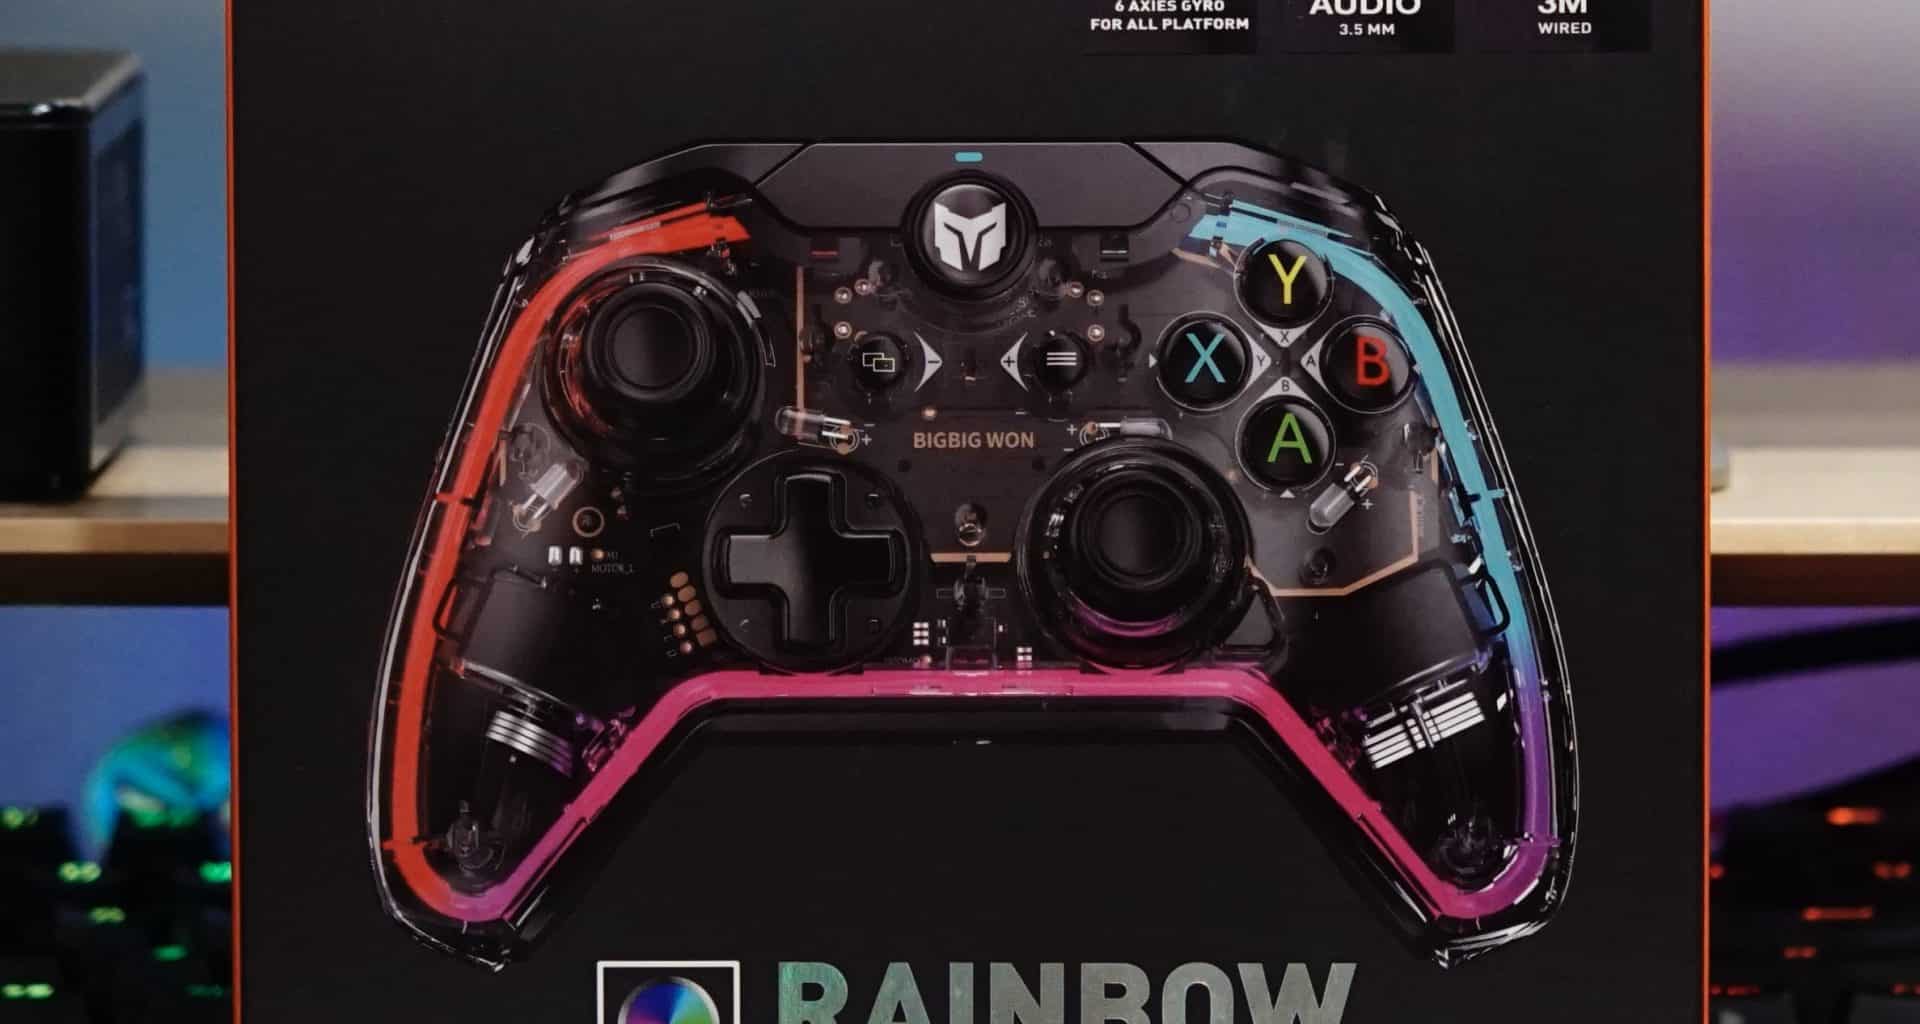 BigBig Won Rainbow Controller Review 1